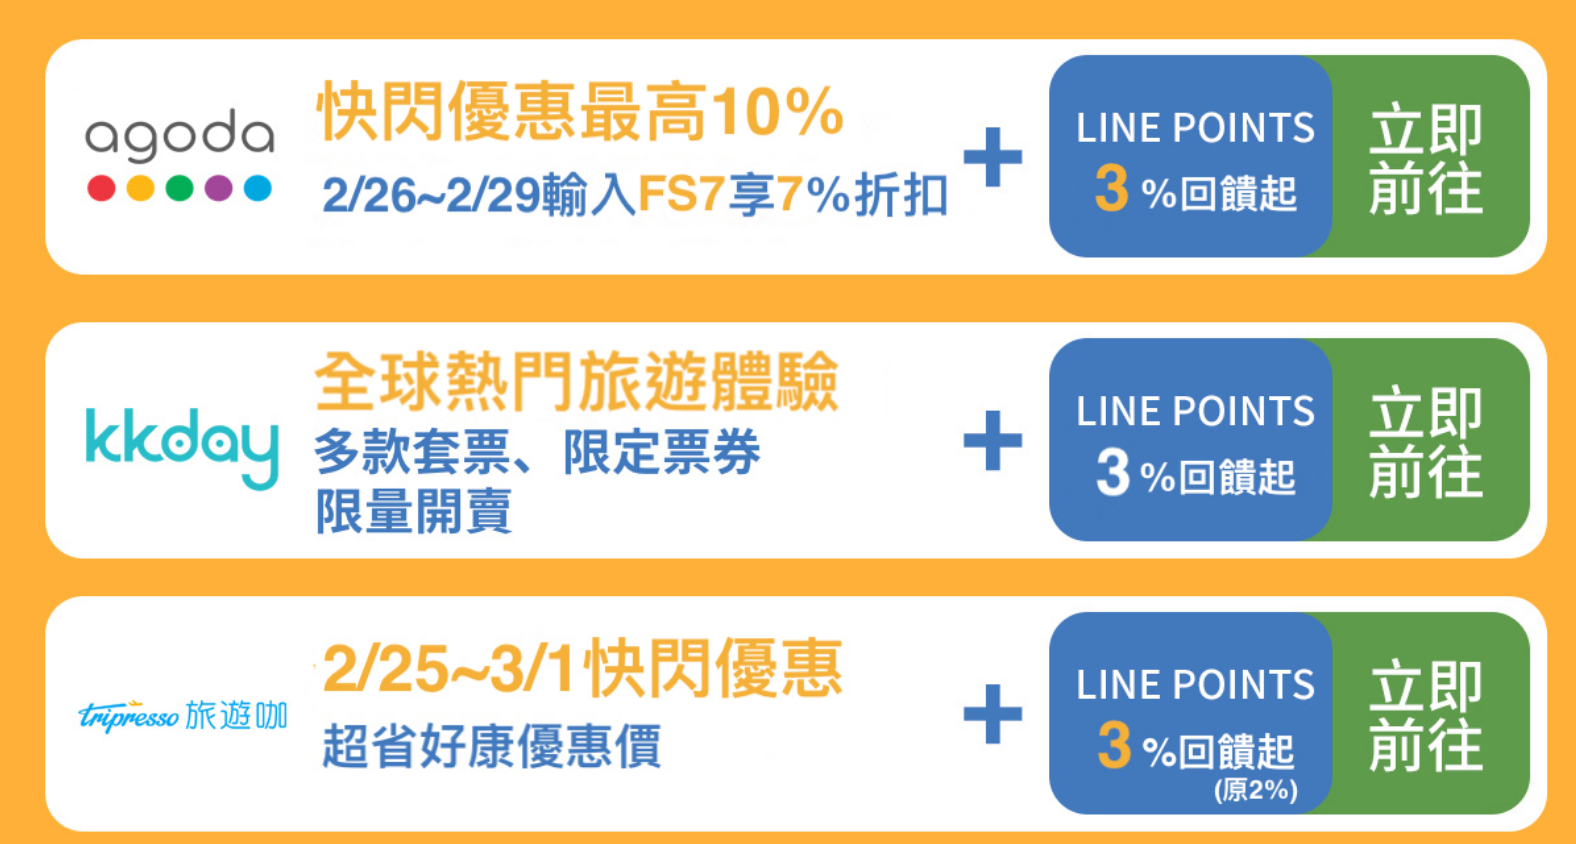 LINE HUB,LINE TV,LINE旅遊,LINE點數,LINE HUB入口網站,LINE購物